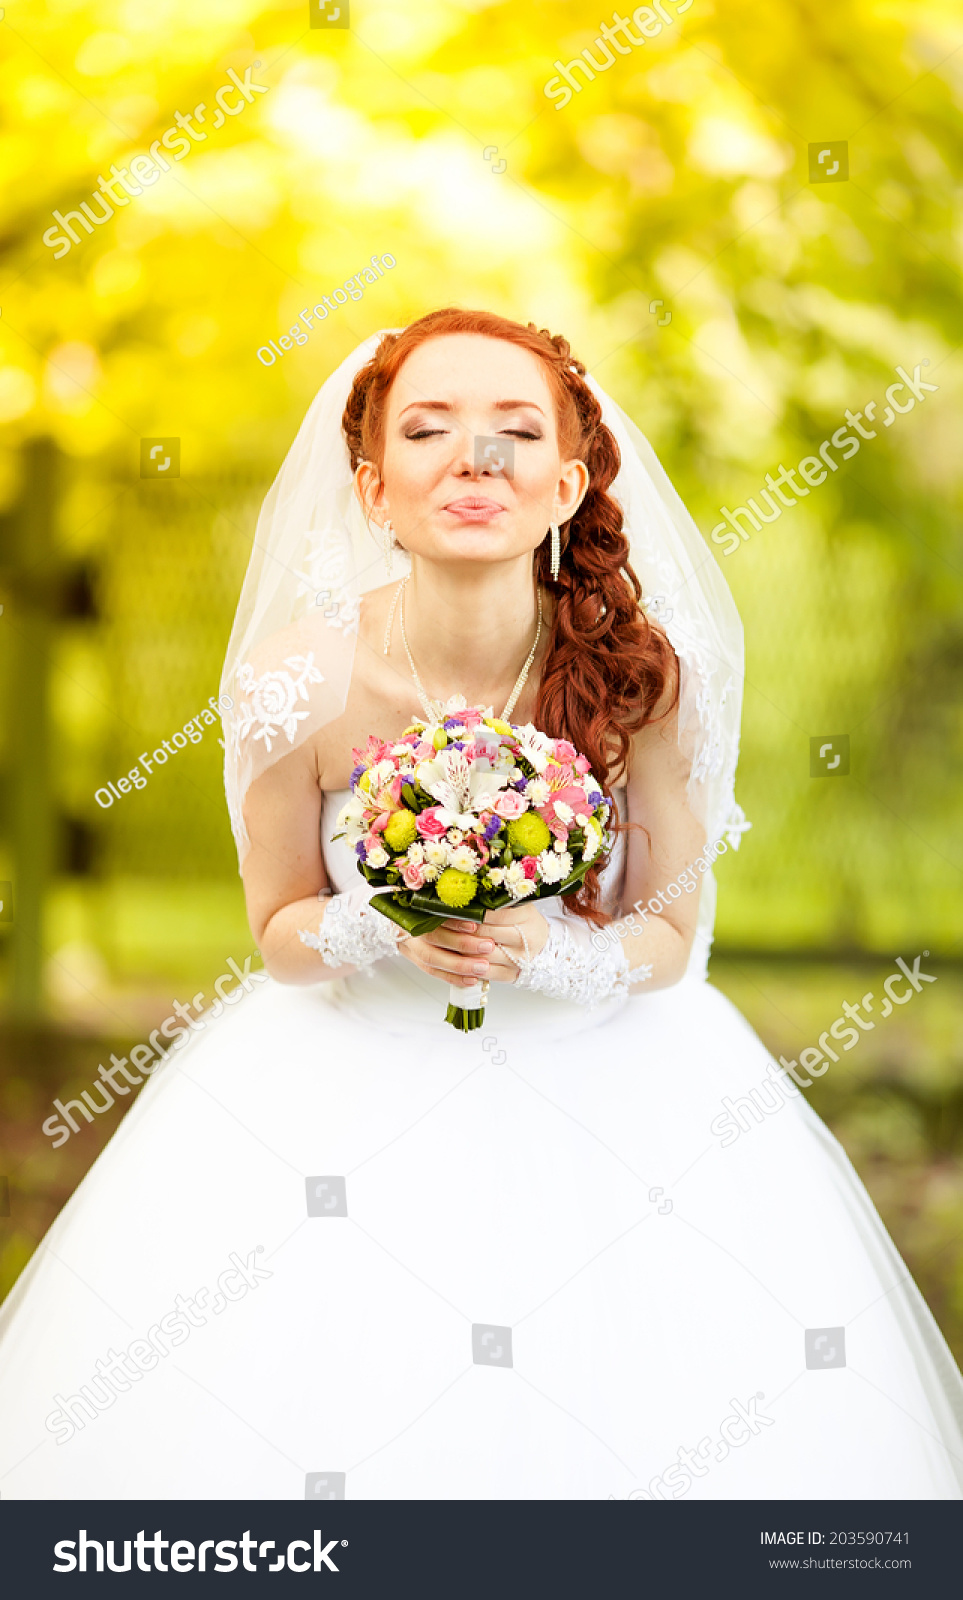 Photos Shutterstock Beautiful Bride Photos 5